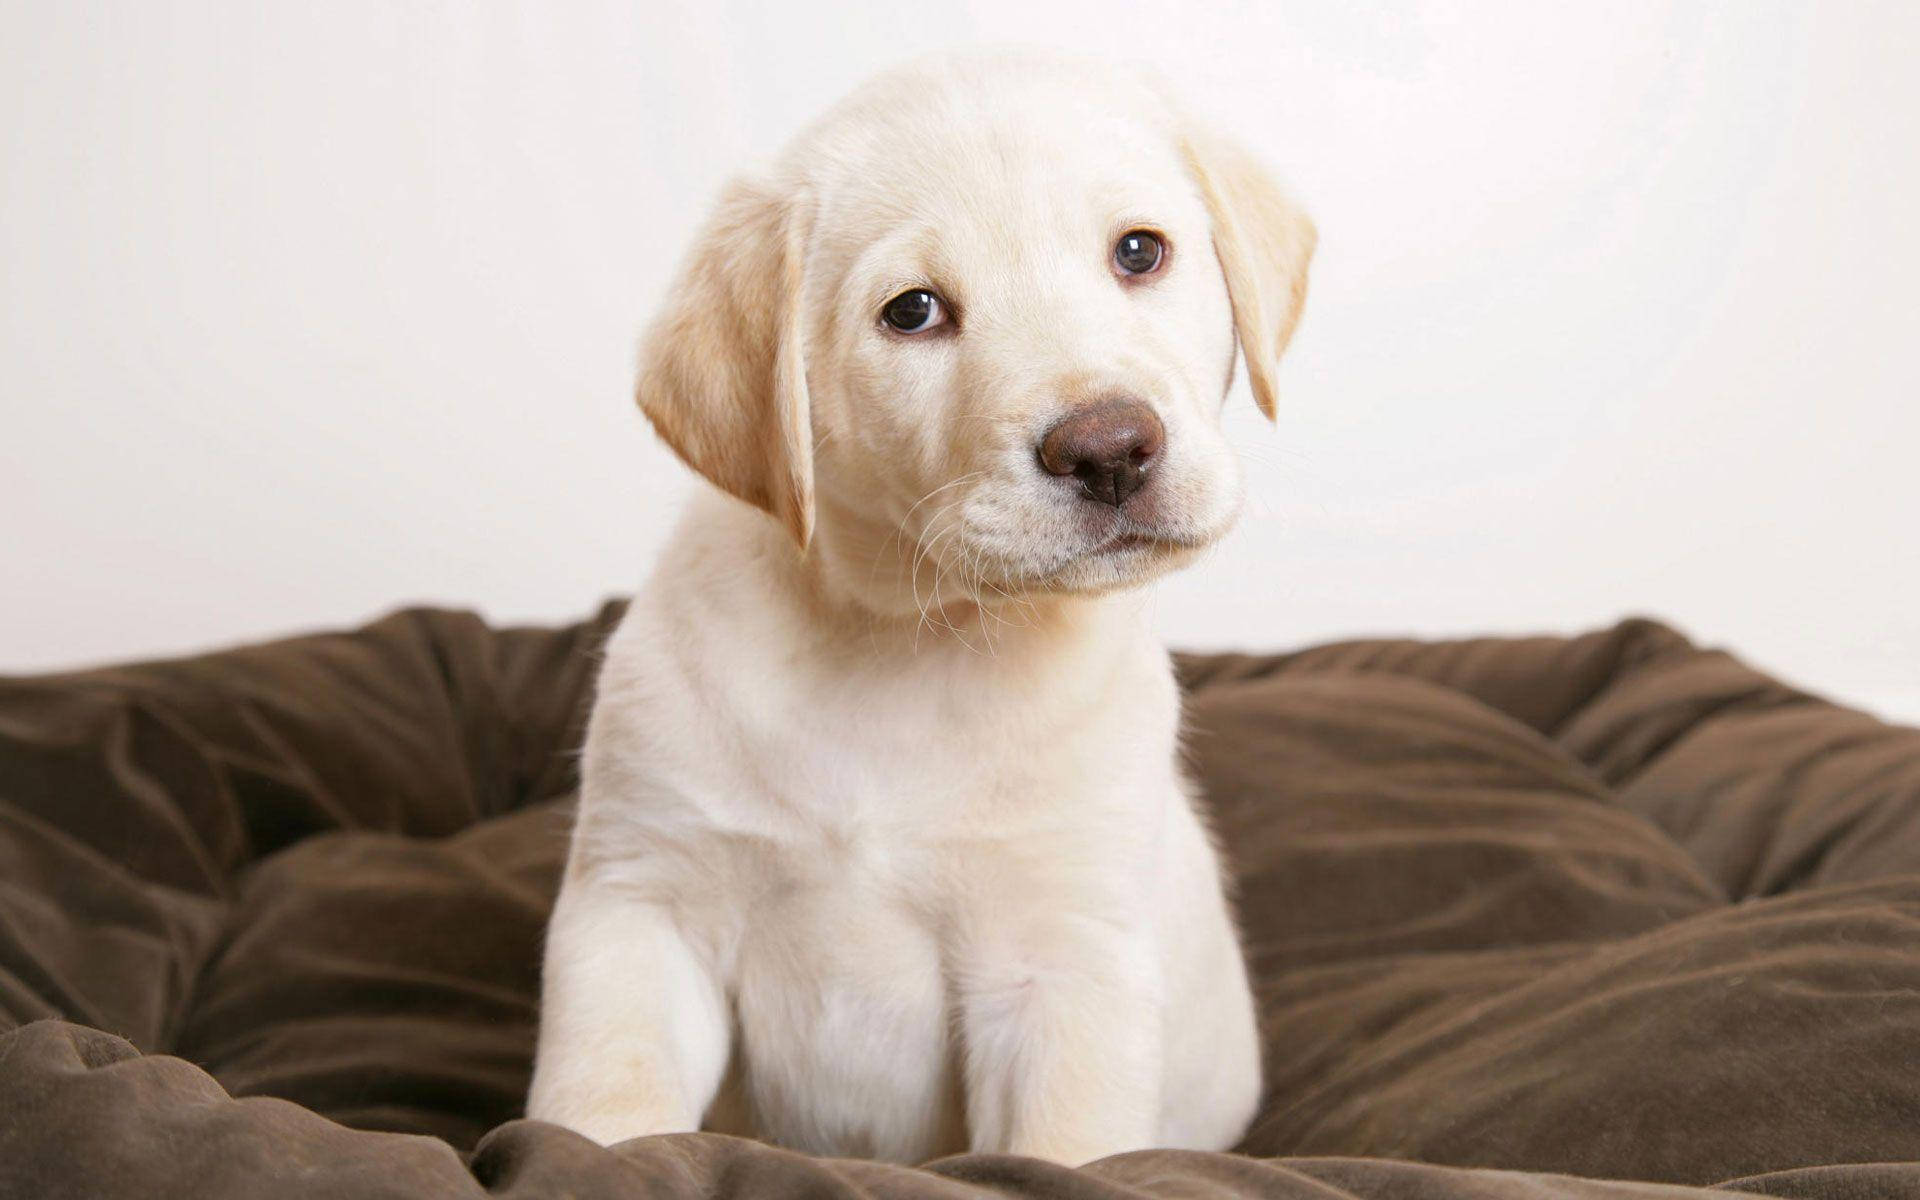 Cute White Puppy On Brown Blanket Background